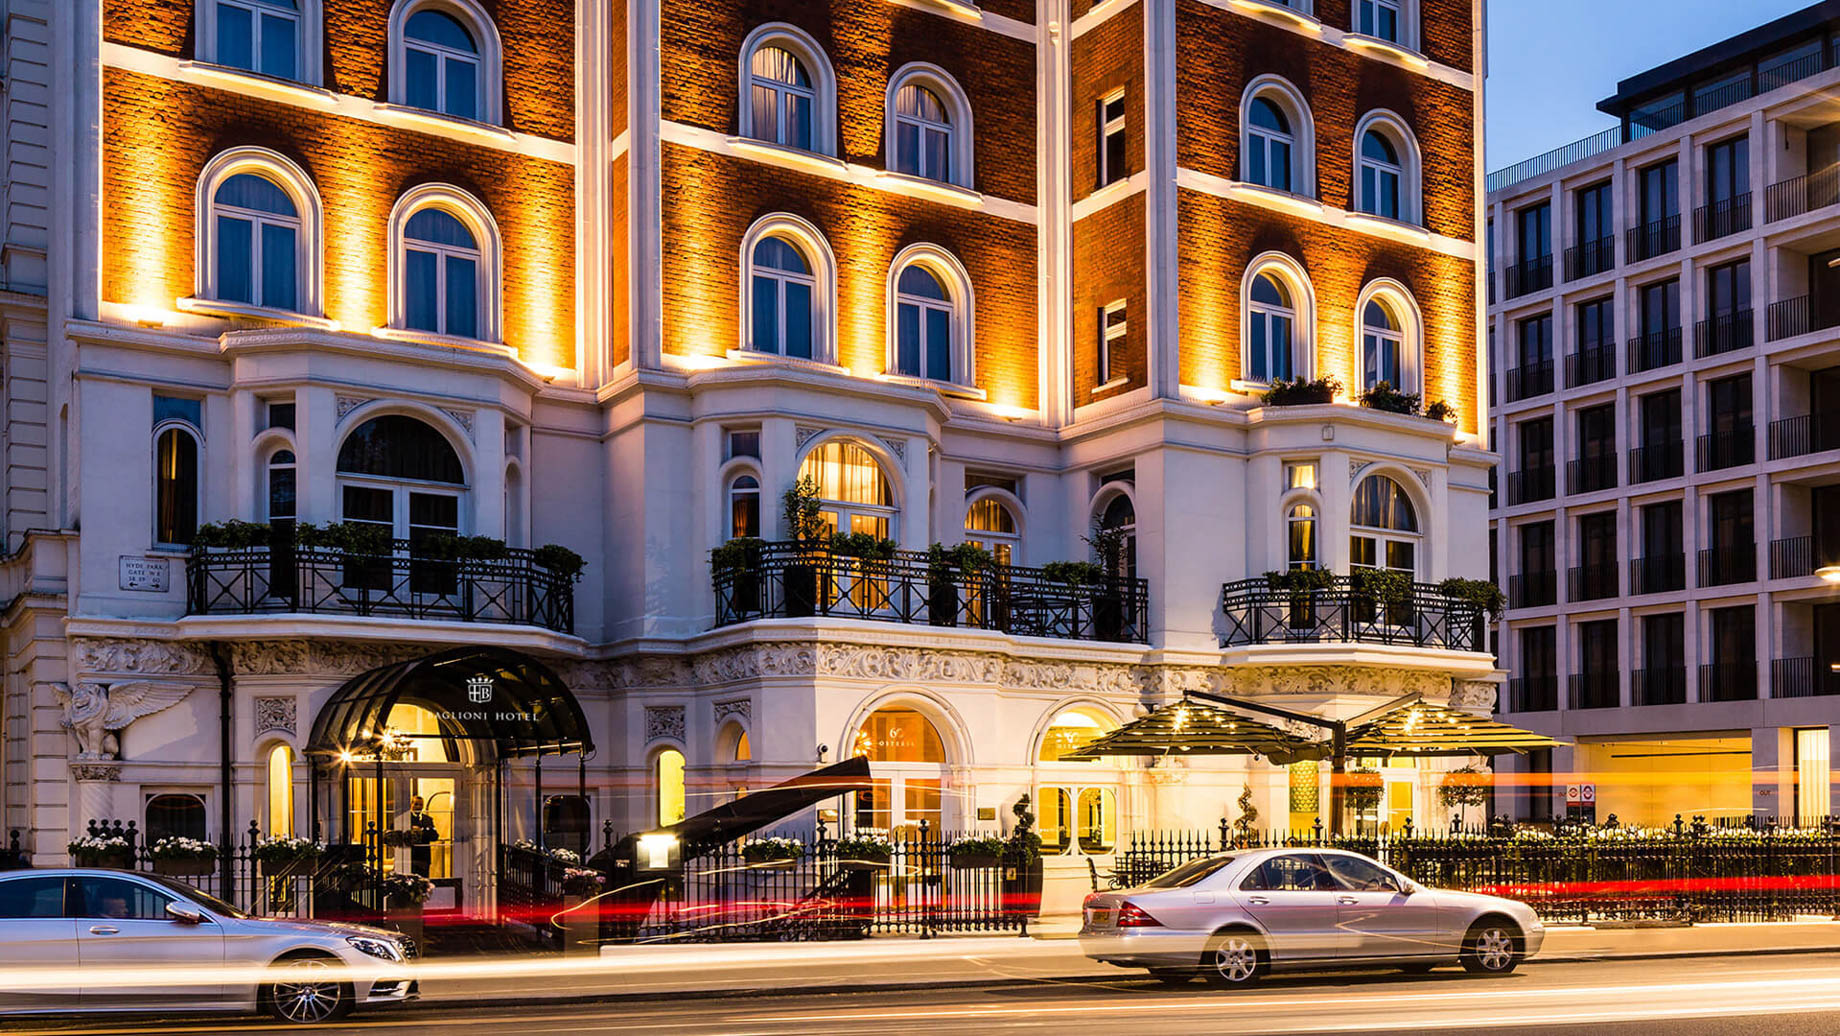 Baglioni Hotel London – South Kensington, London, United Kingdom – Exterior Night